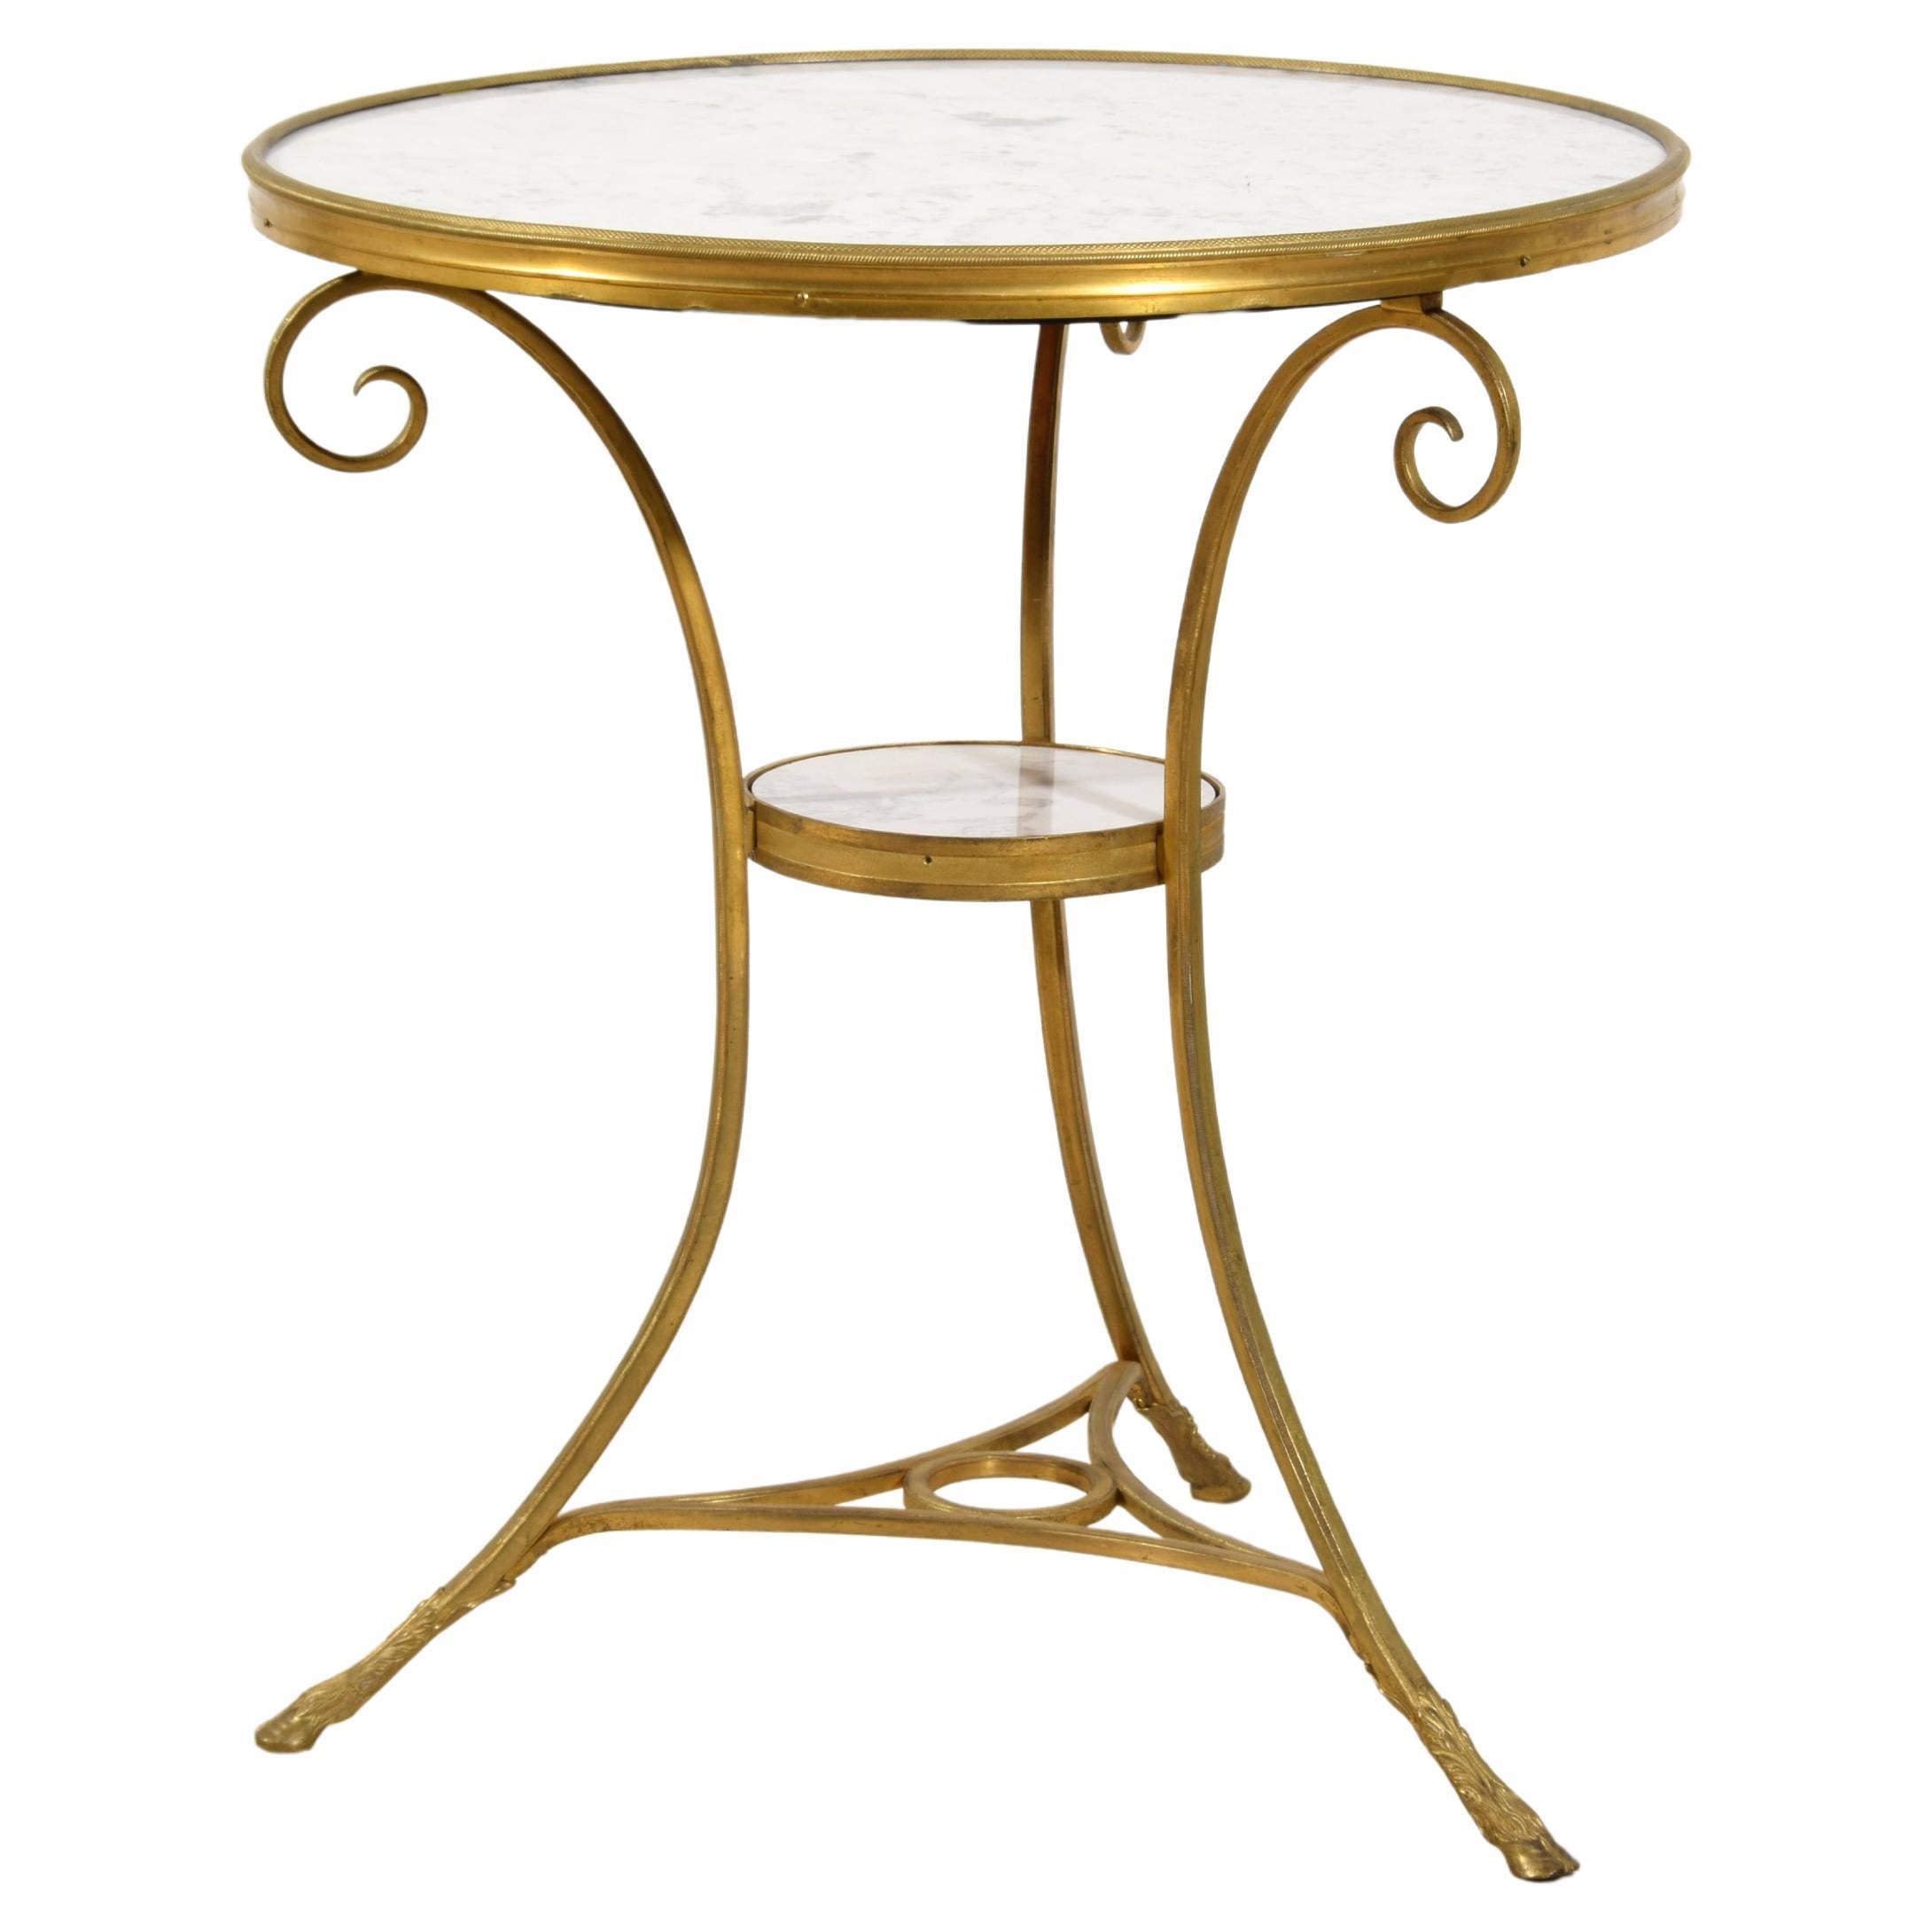 19th Century, Louis XVI Style French Gilt Bronze Tripod Coffee Table or Guéridon